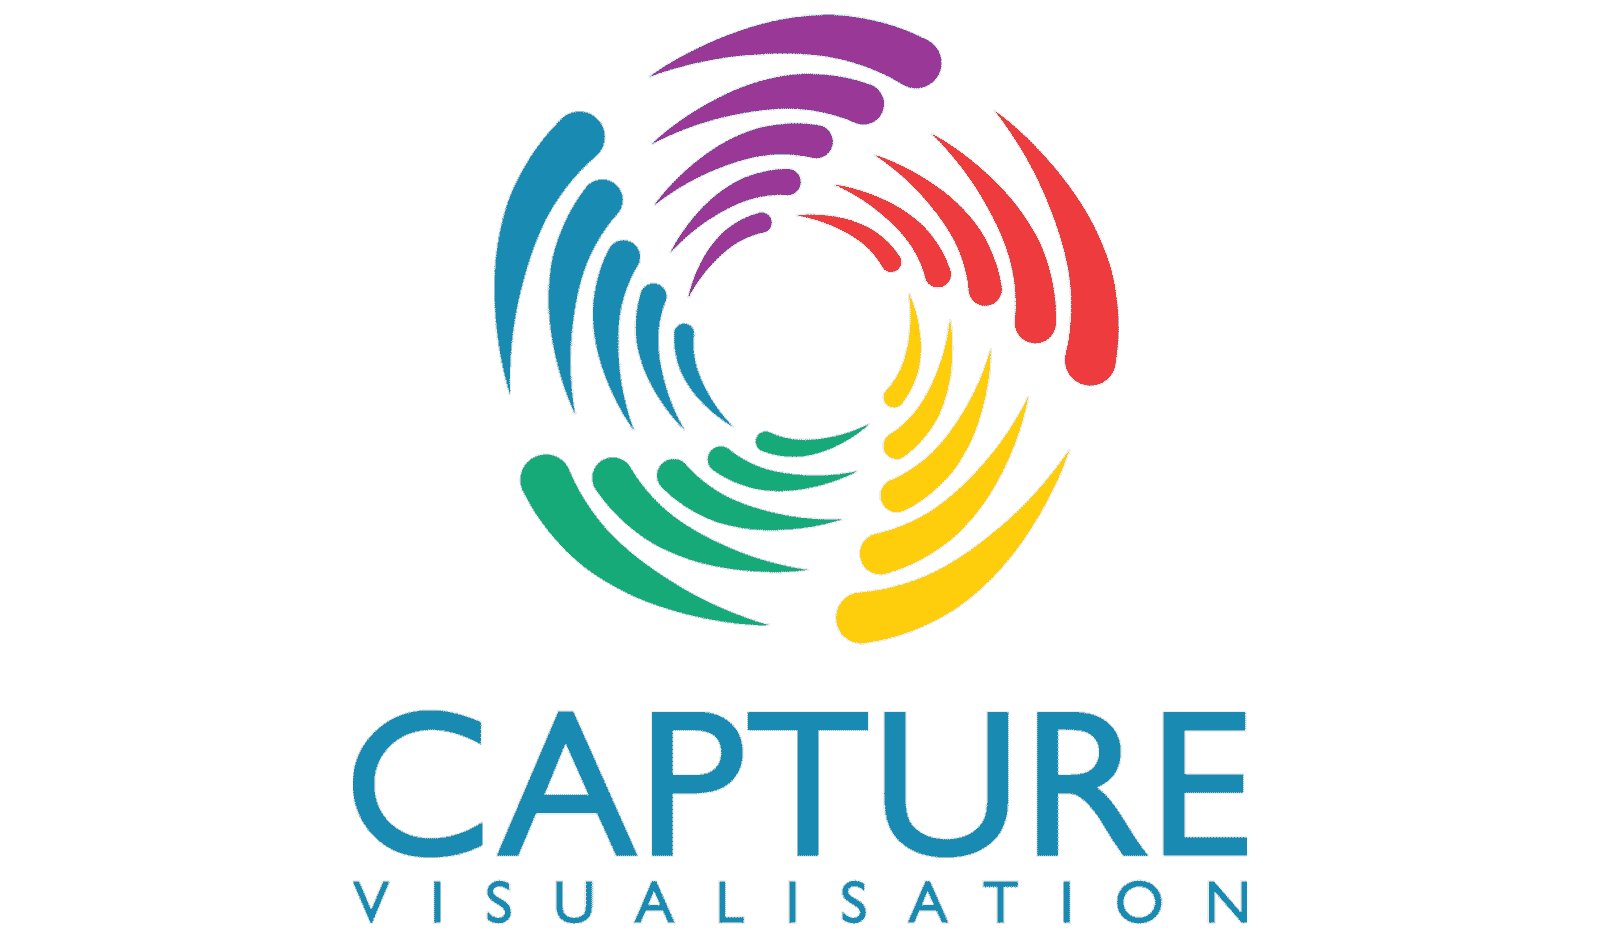 Formation Capture Visualisation